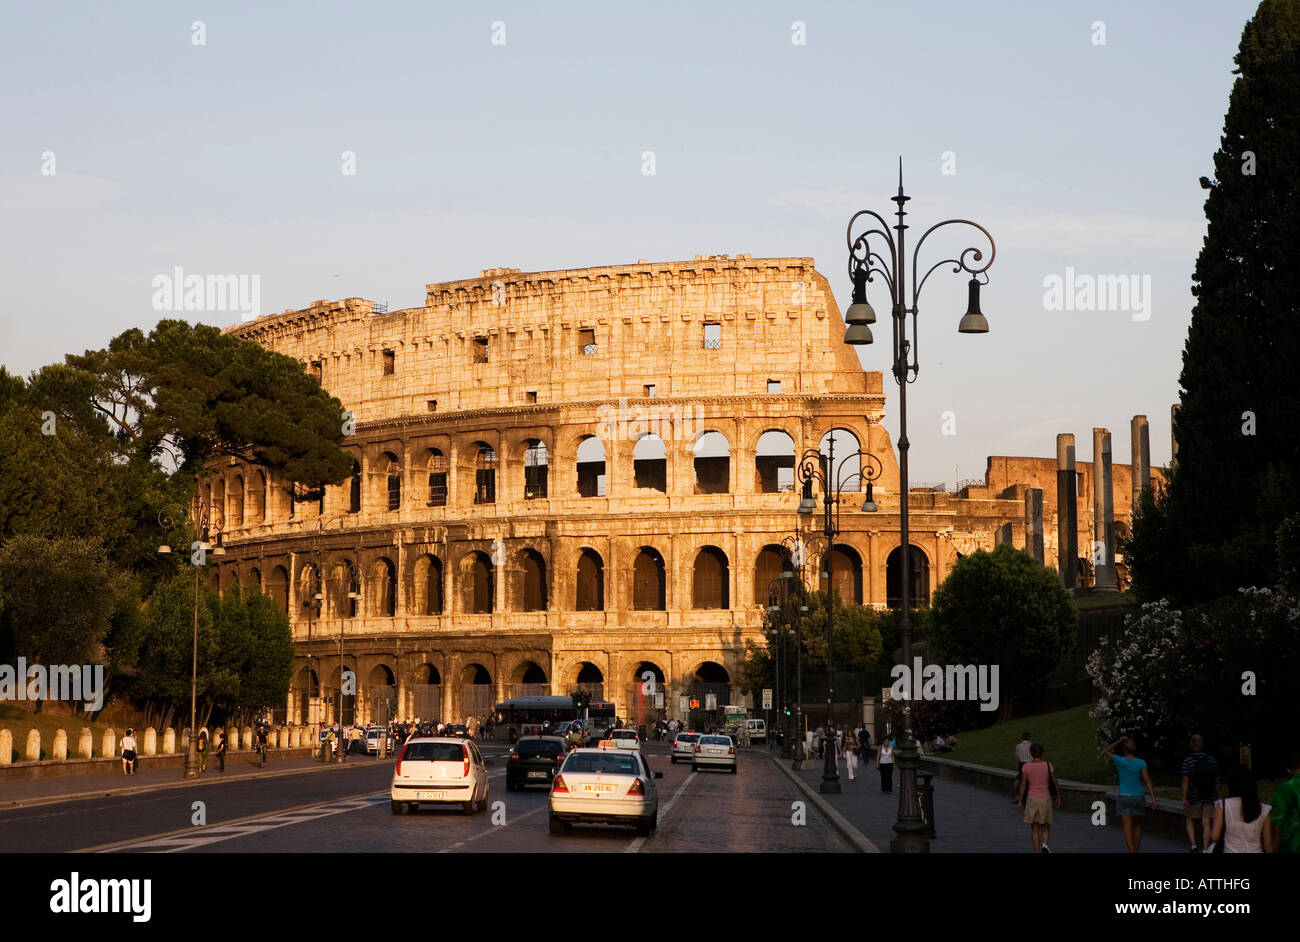 Roman Kolosseum Colosseum in Roma Rome Italy Europe EU Stock Photo